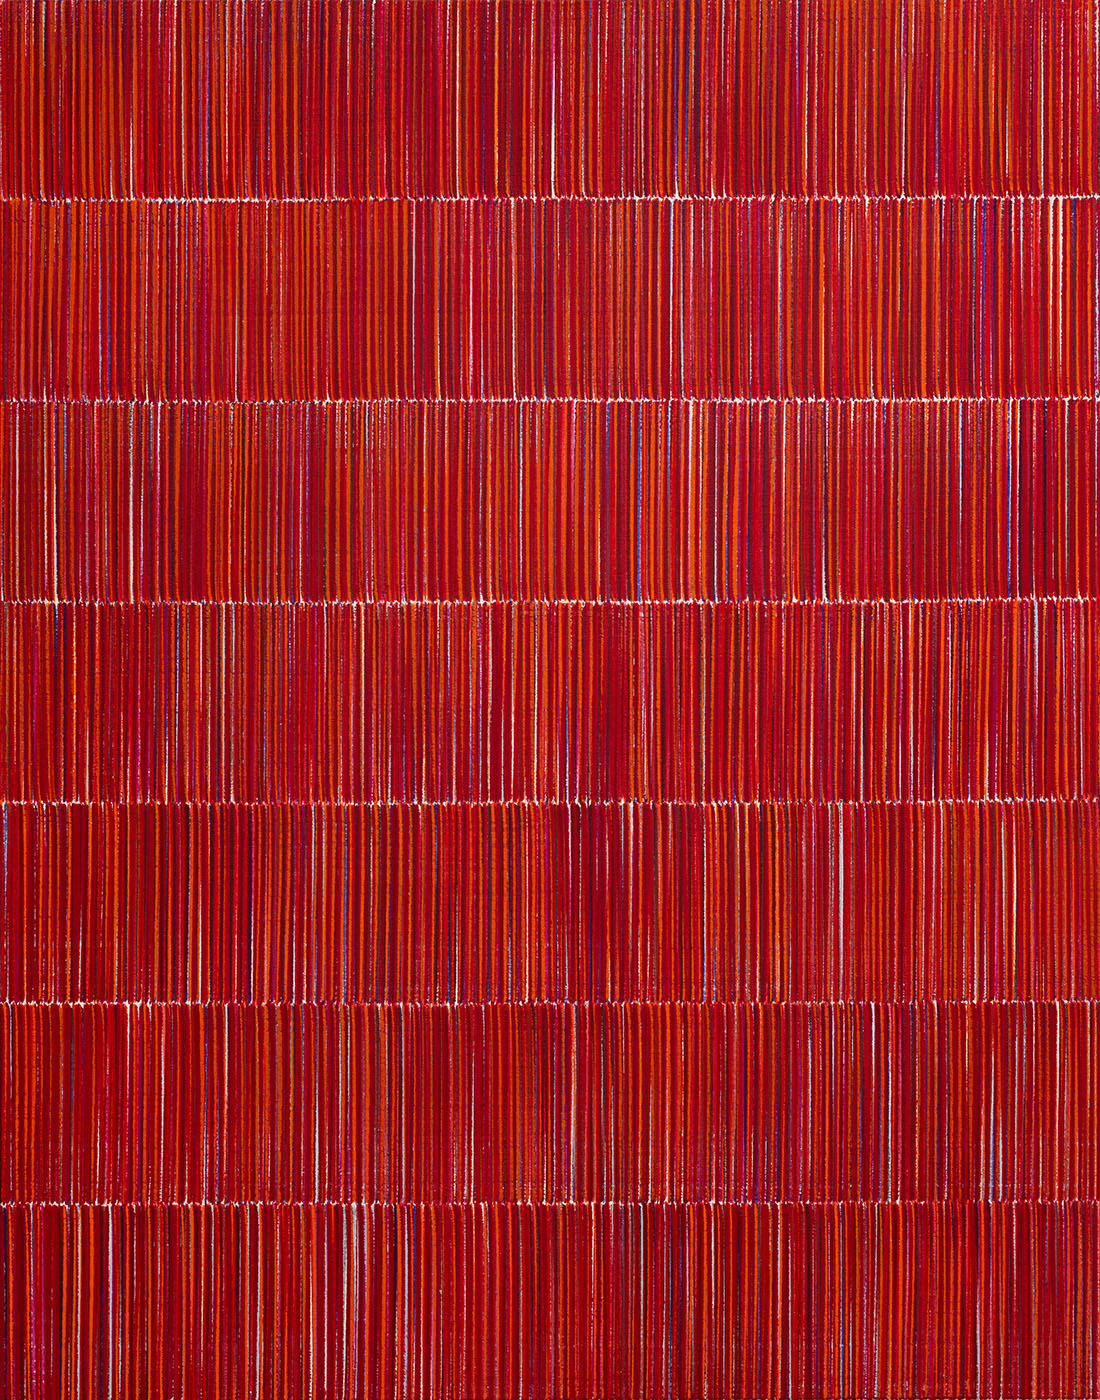 Nikola Dimitrov, FarbKlang III, 2019, Pigmente, Bindemittel auf Leinwand, 140 × 110 cm